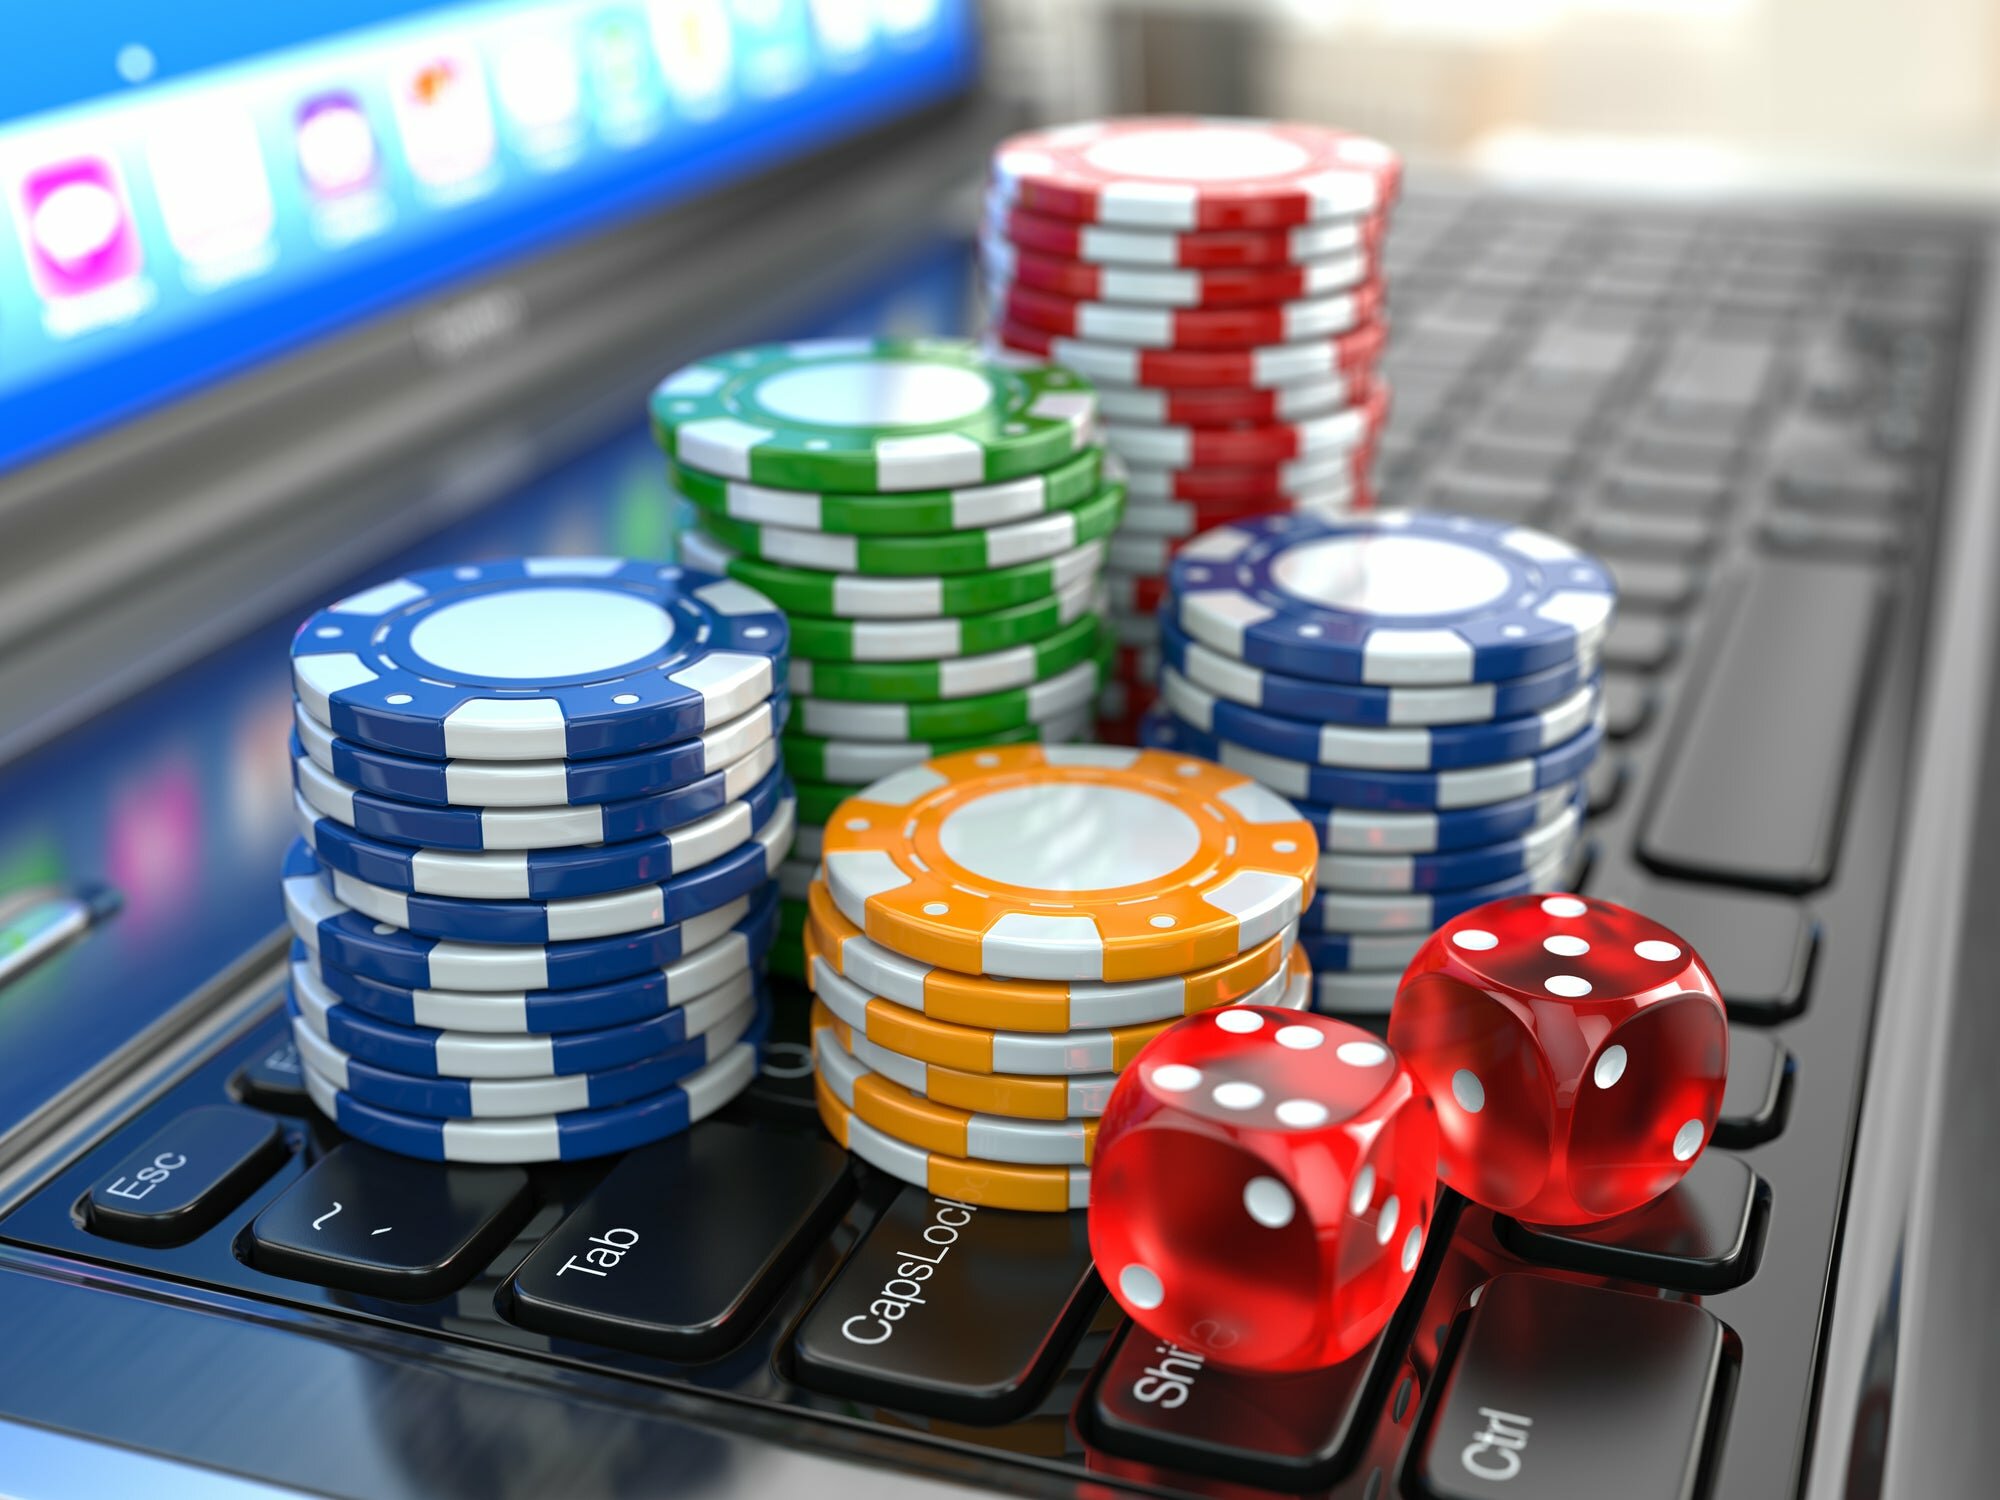 Dice and casino chips representing online gambling